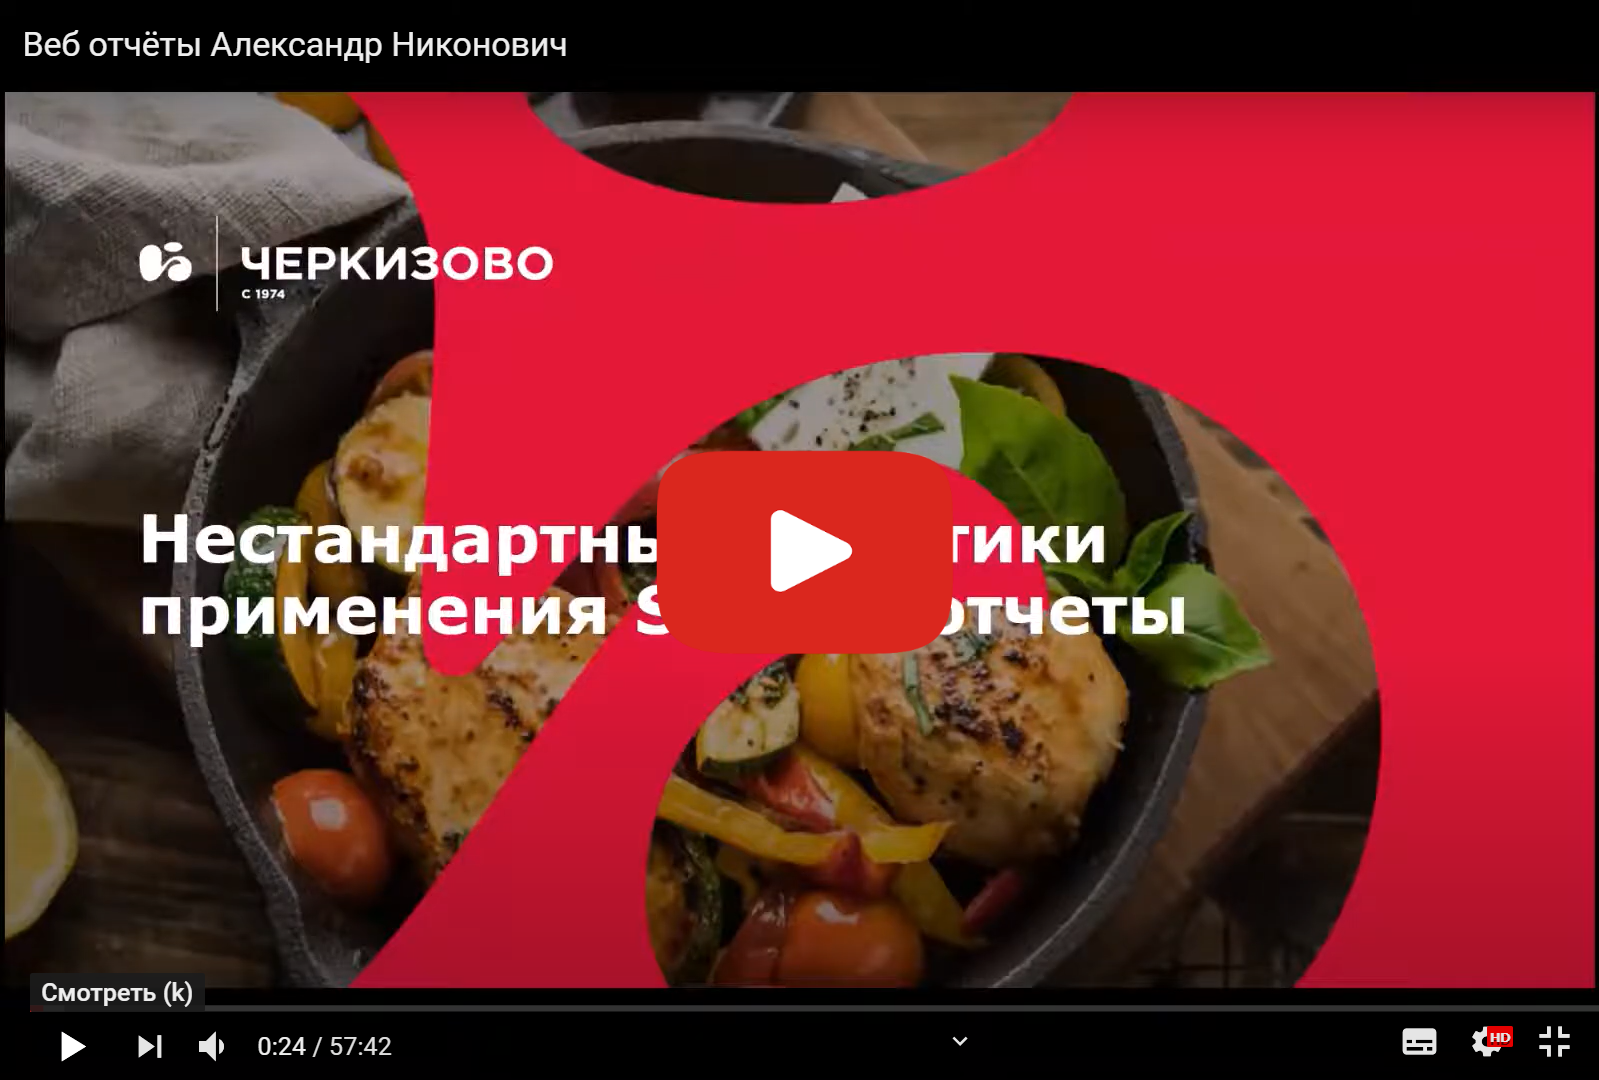 Video_Nikonovich